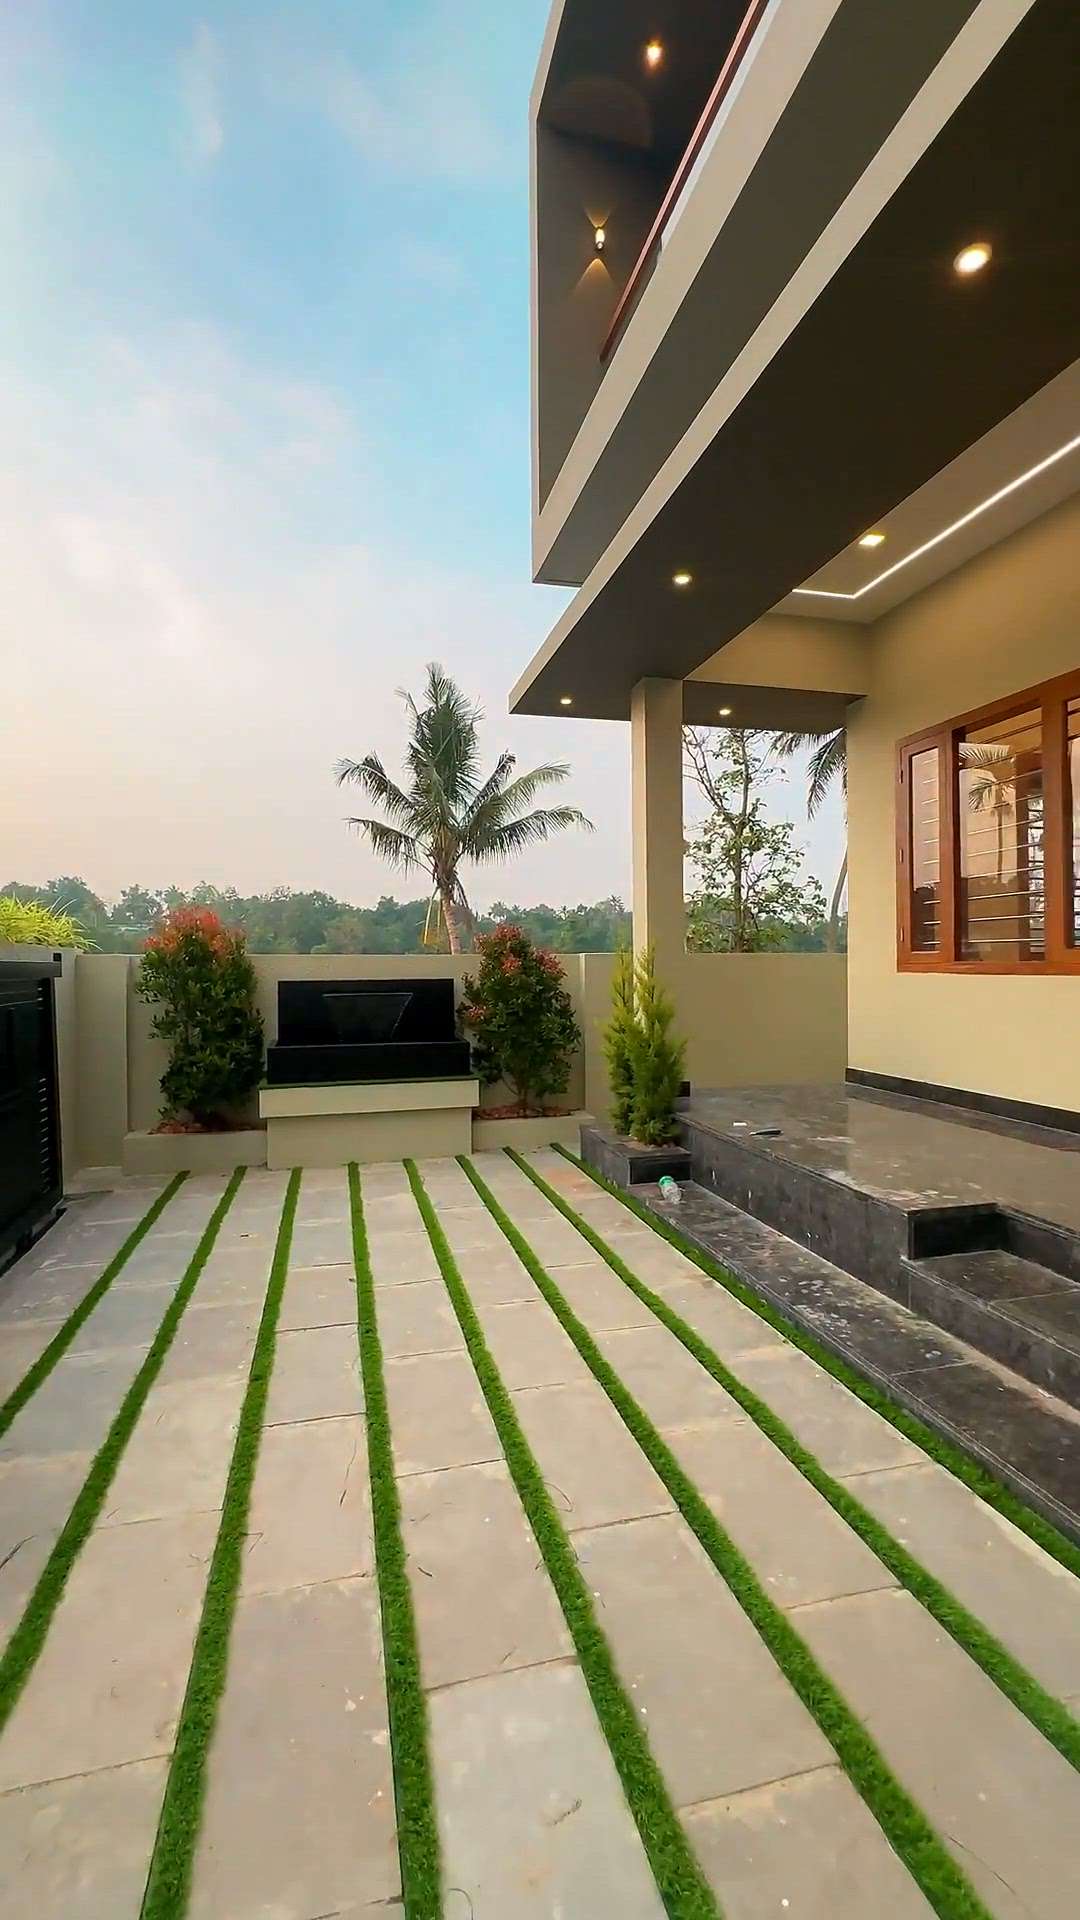 4.100 cent land/ 2020 sqft /3bhk/location  ernakulam pukkattupady  #HouseDesigns #ContemporaryHouse #Architect #Grid #Designs